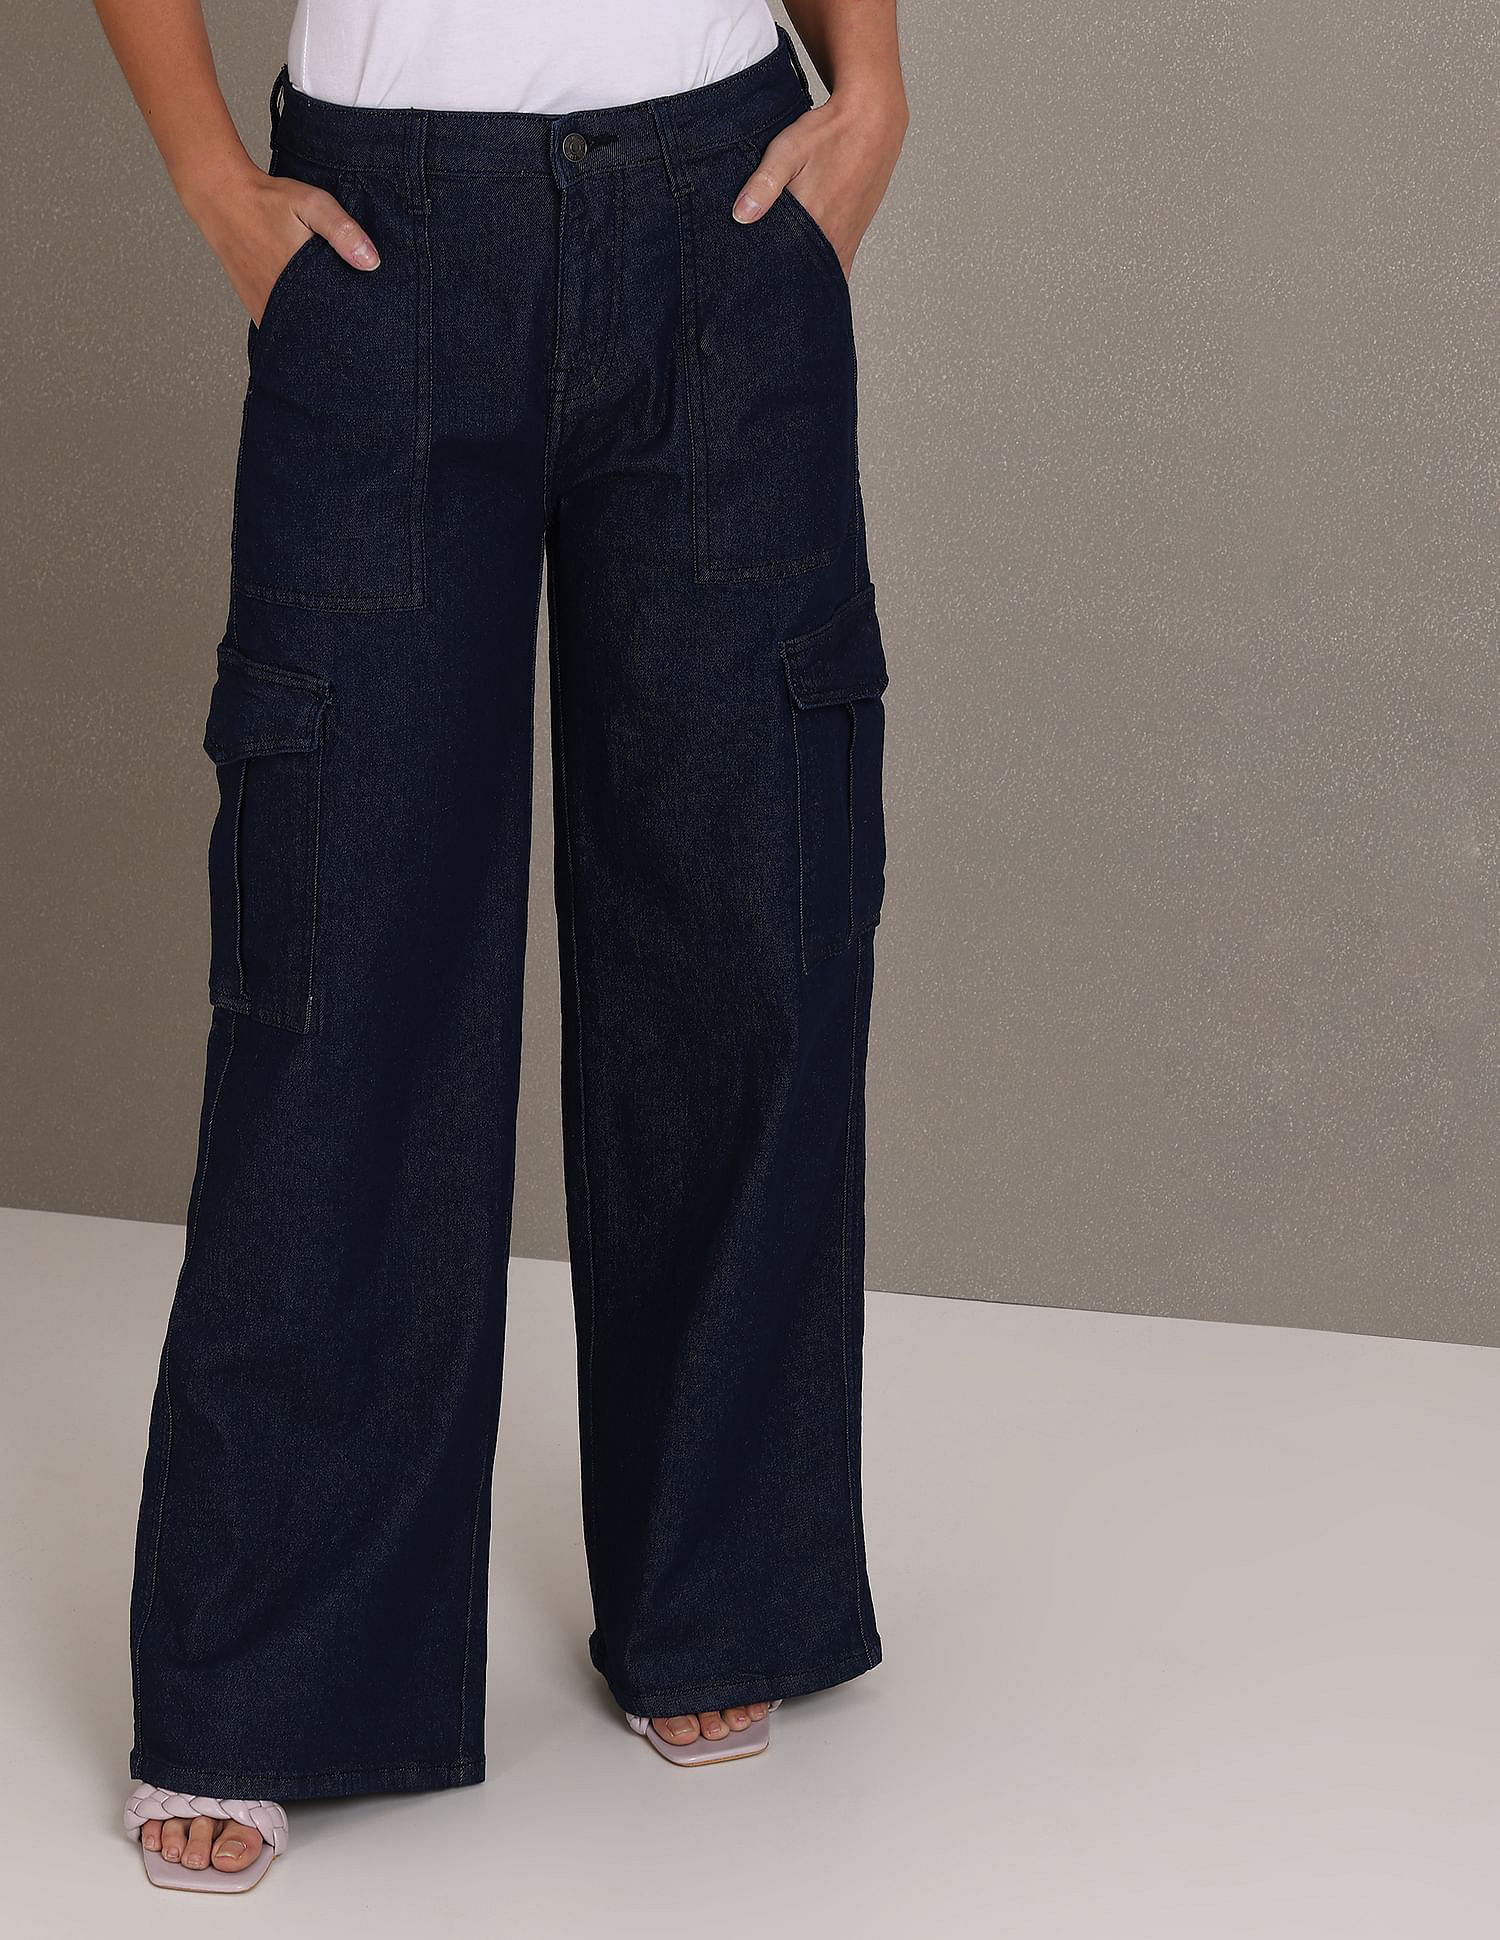 Dickies Relaxed Fit Cargo Pants Mens Size 42x32 Workwear Khaki Straight Leg  | eBay